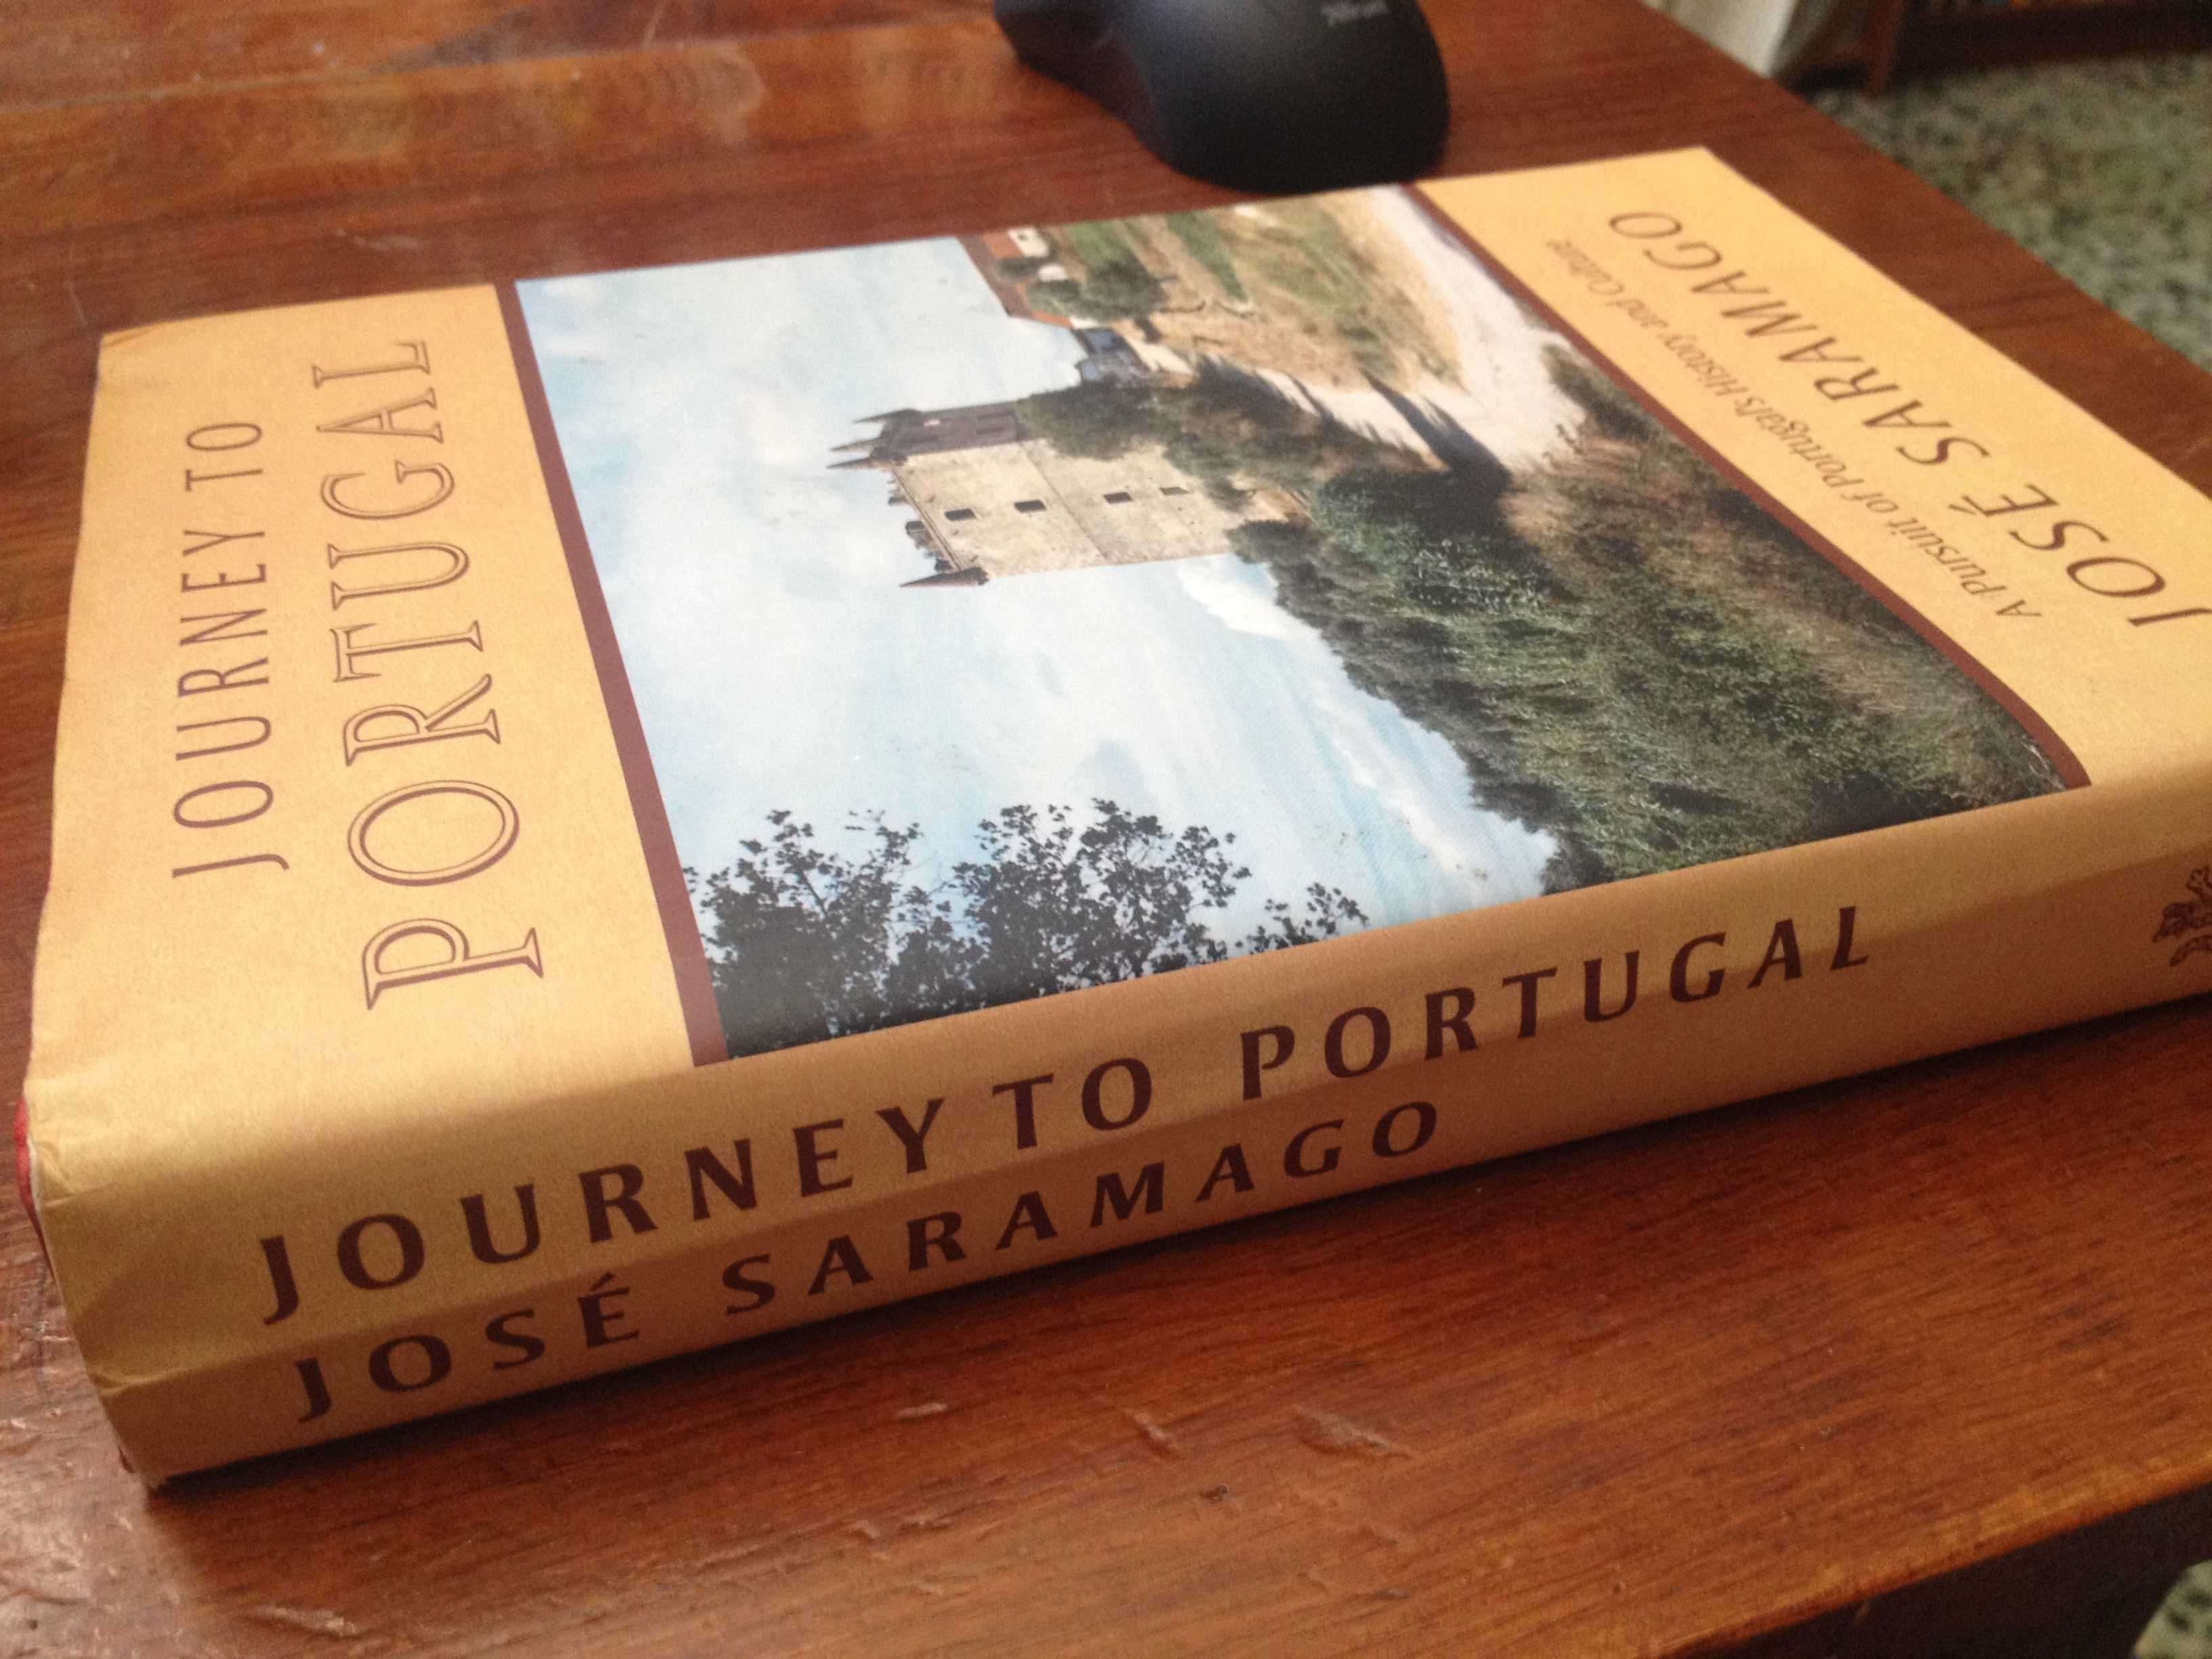 José Saramago - Journey to Portugal